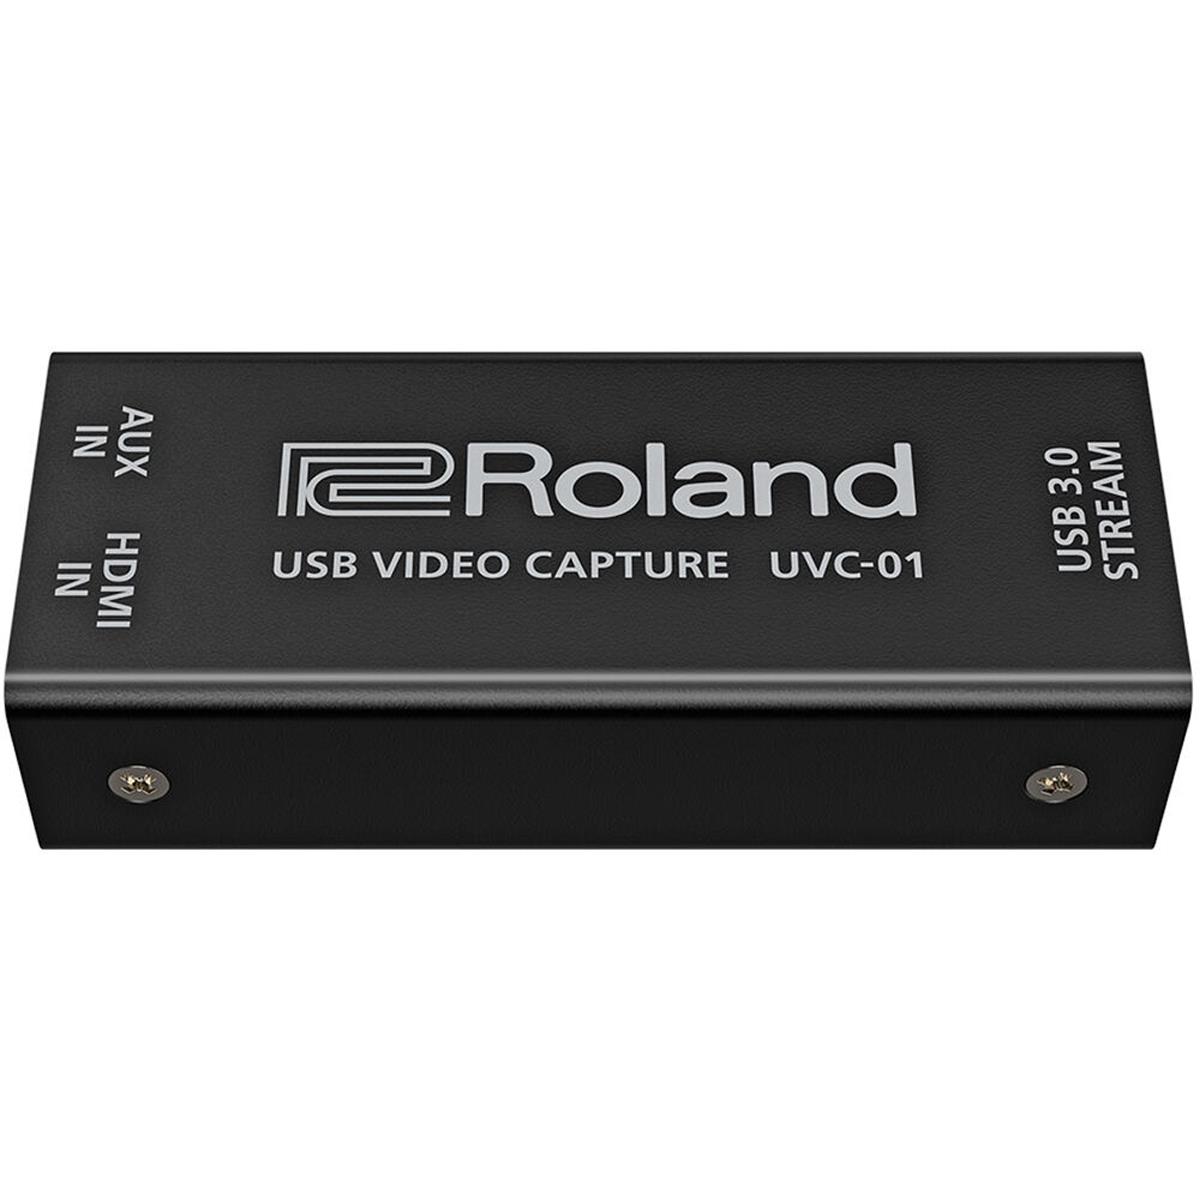 Image of Roland UVC-01 USB Video Capture Device